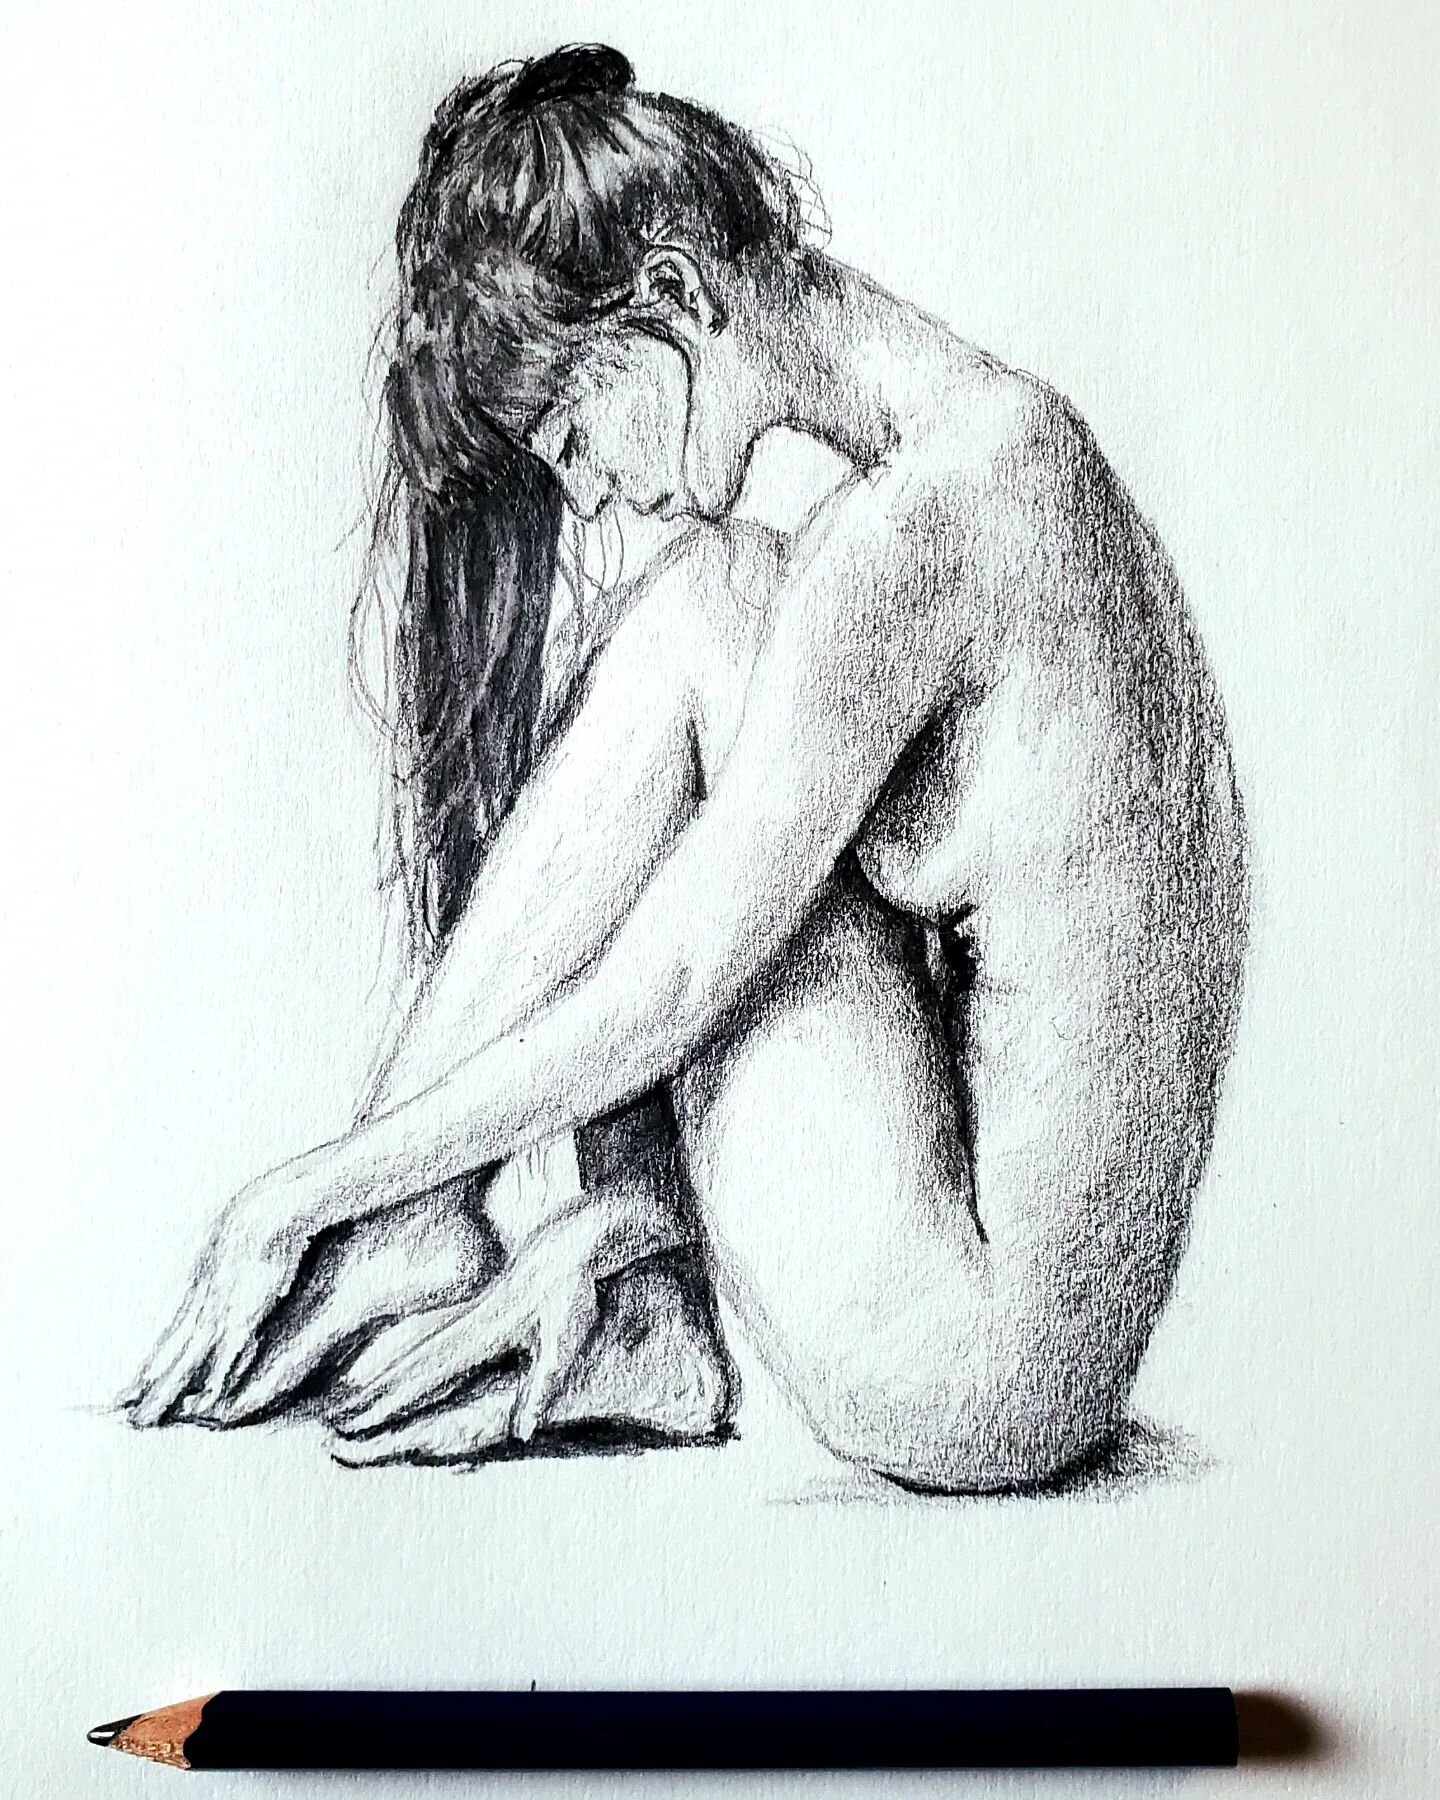 Figure drawing practice

_____

#pencildrawing #model #figuredrawing #sketchbook #artoftheday #dailyart #pencilsketch #blackandwhite #seacoastnh #newhampshire